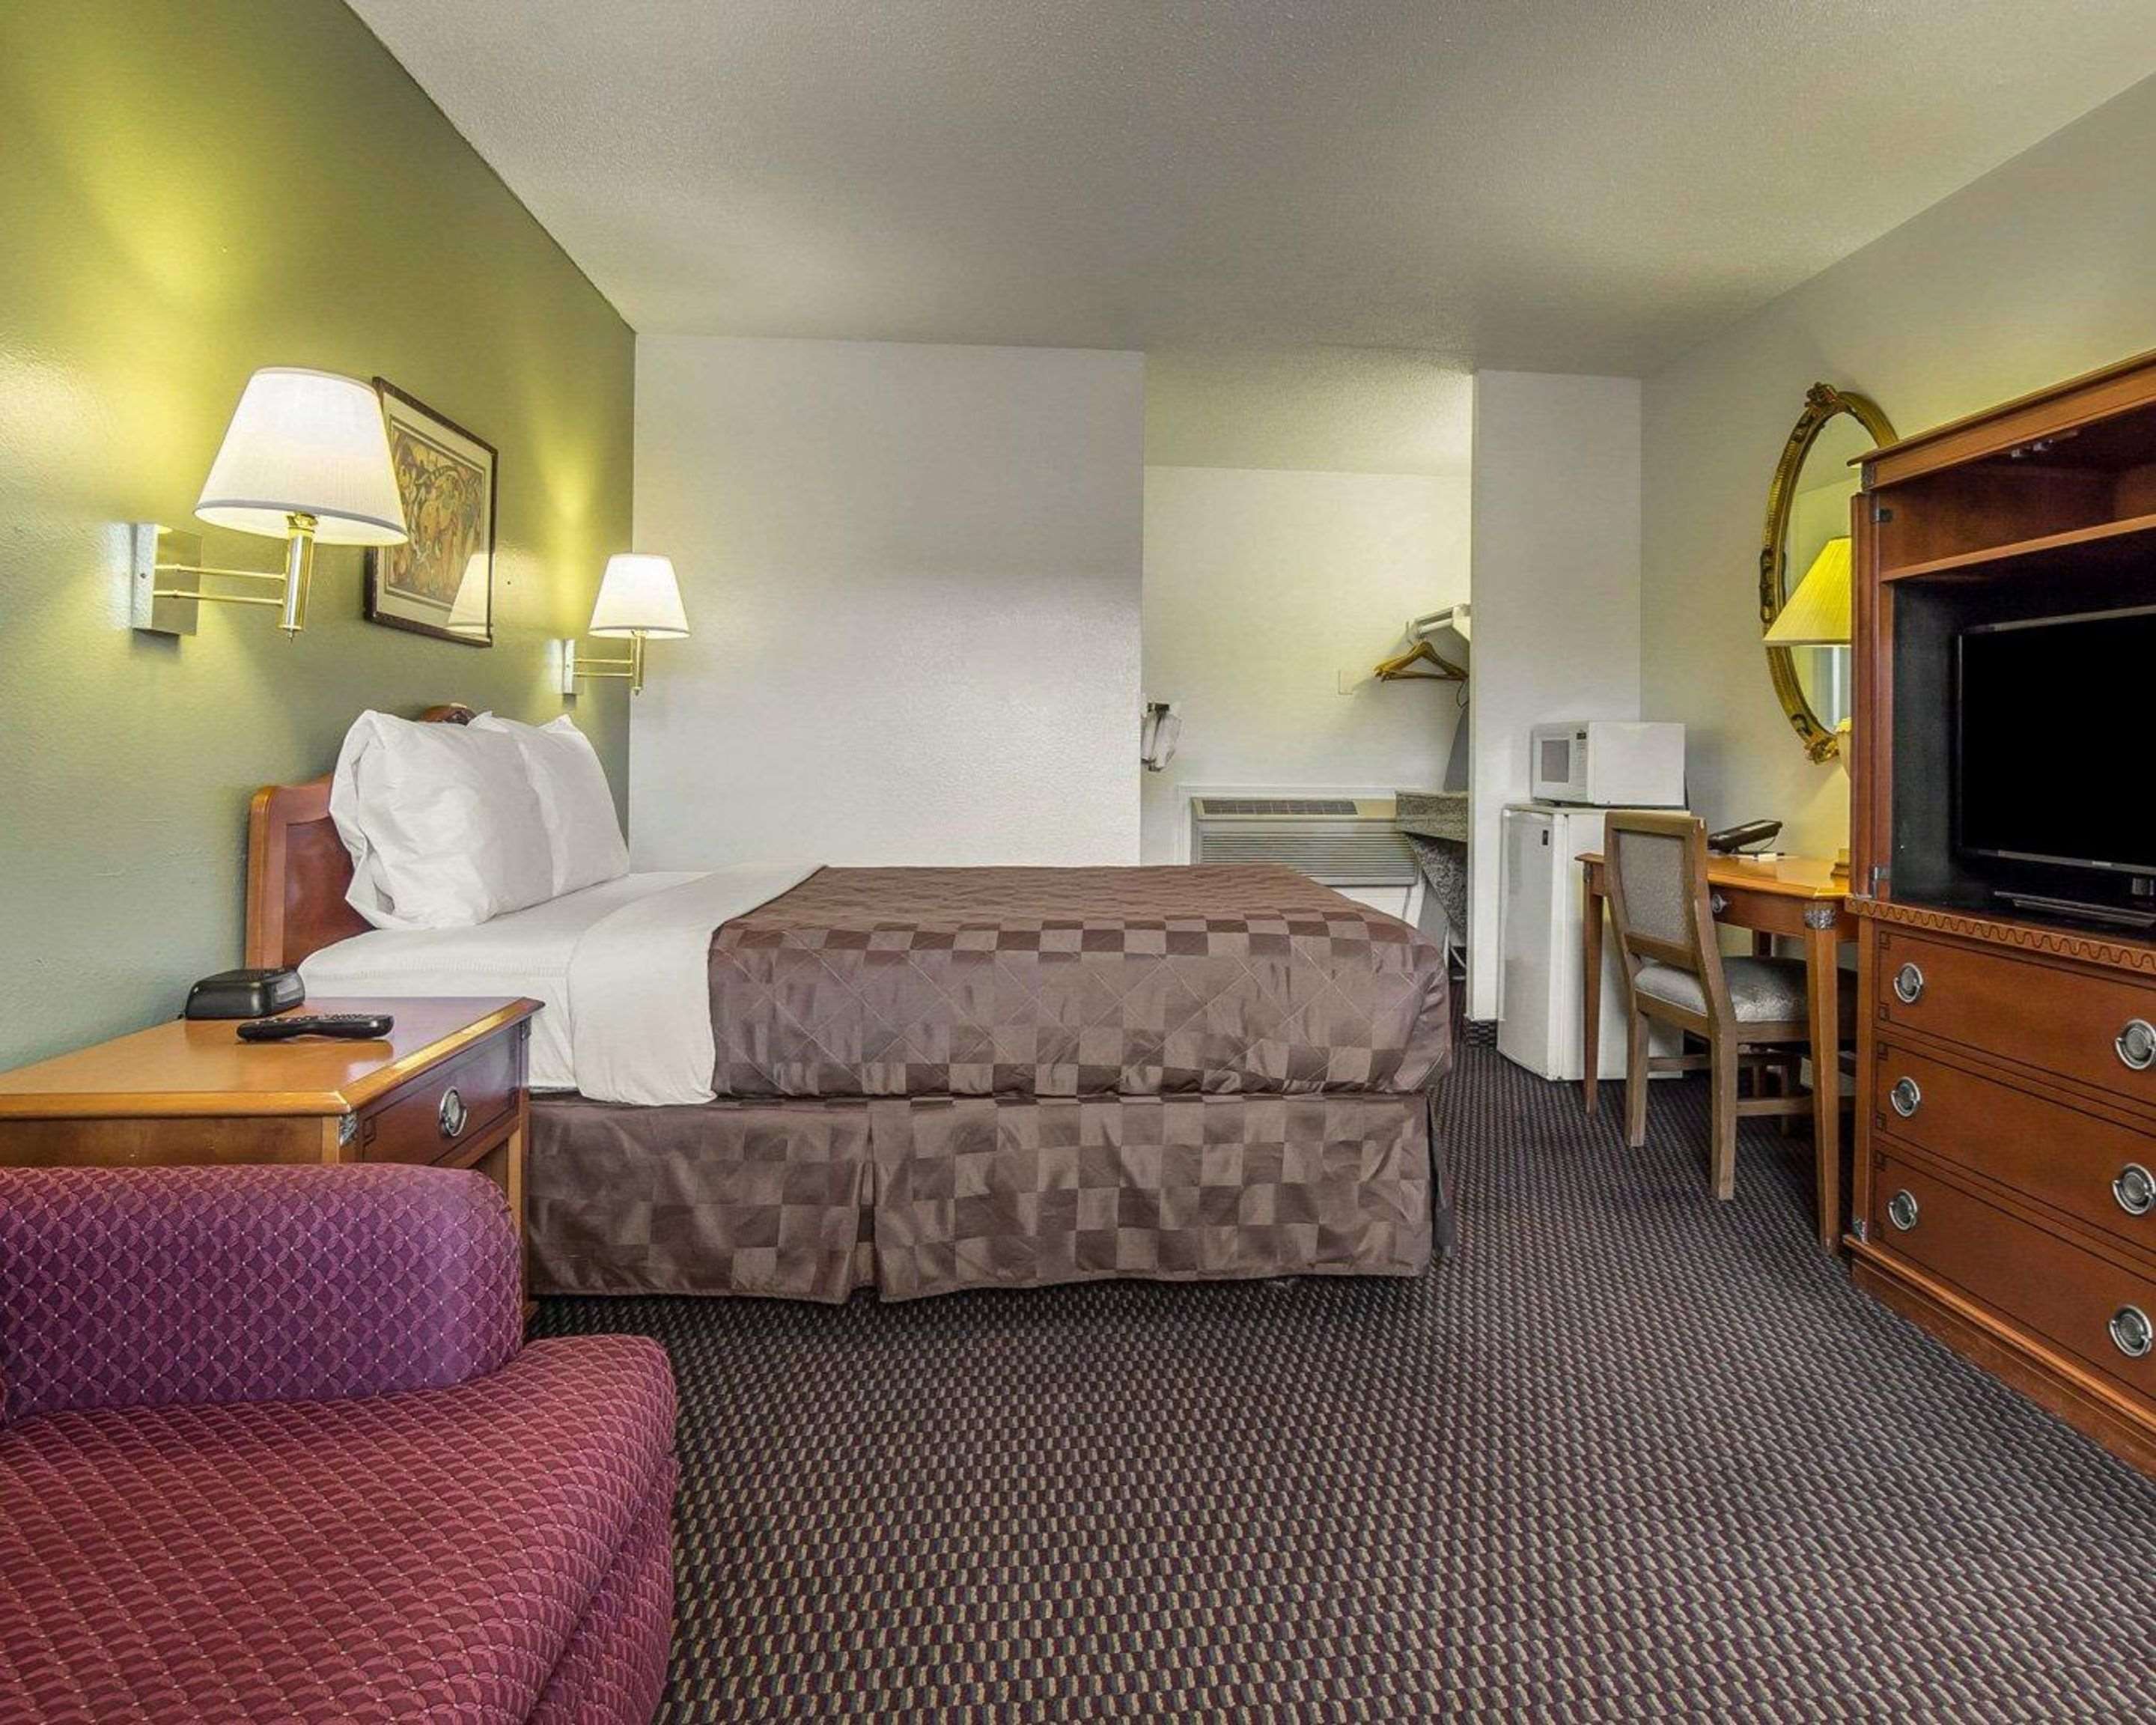 Rodeway Inn & Suites Photo